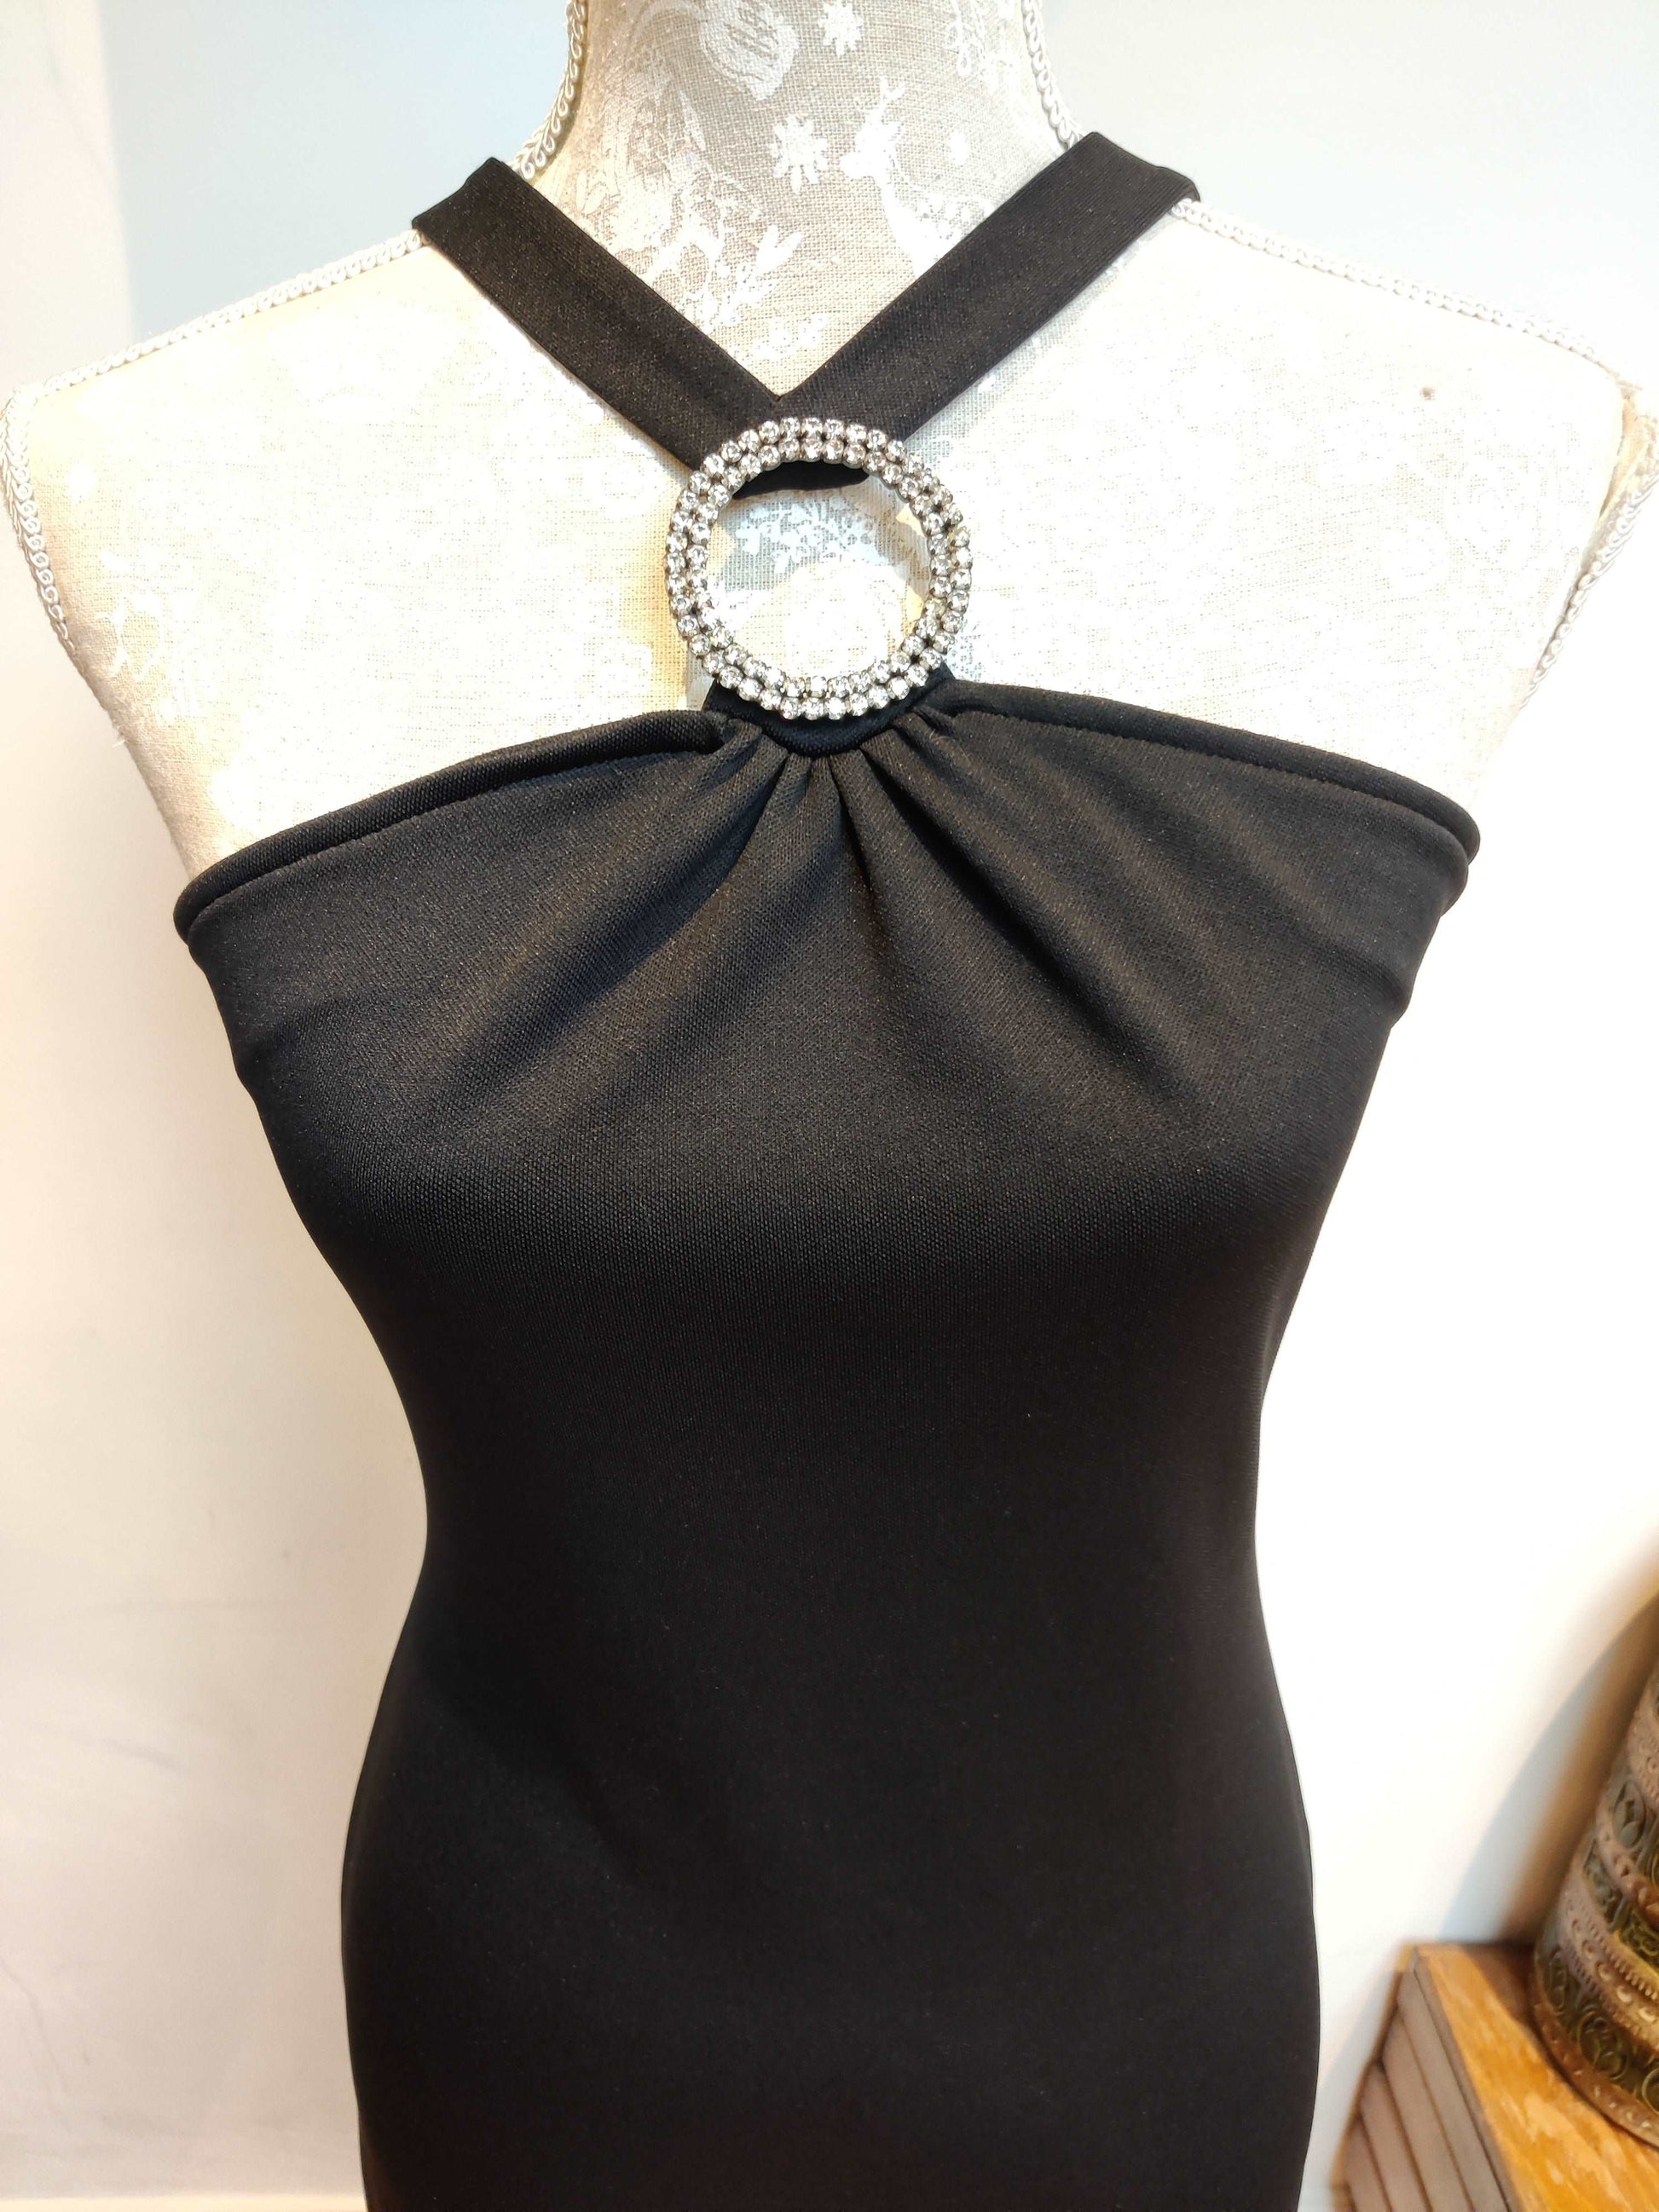 Black vintage maxi dress with diamante ring detail.